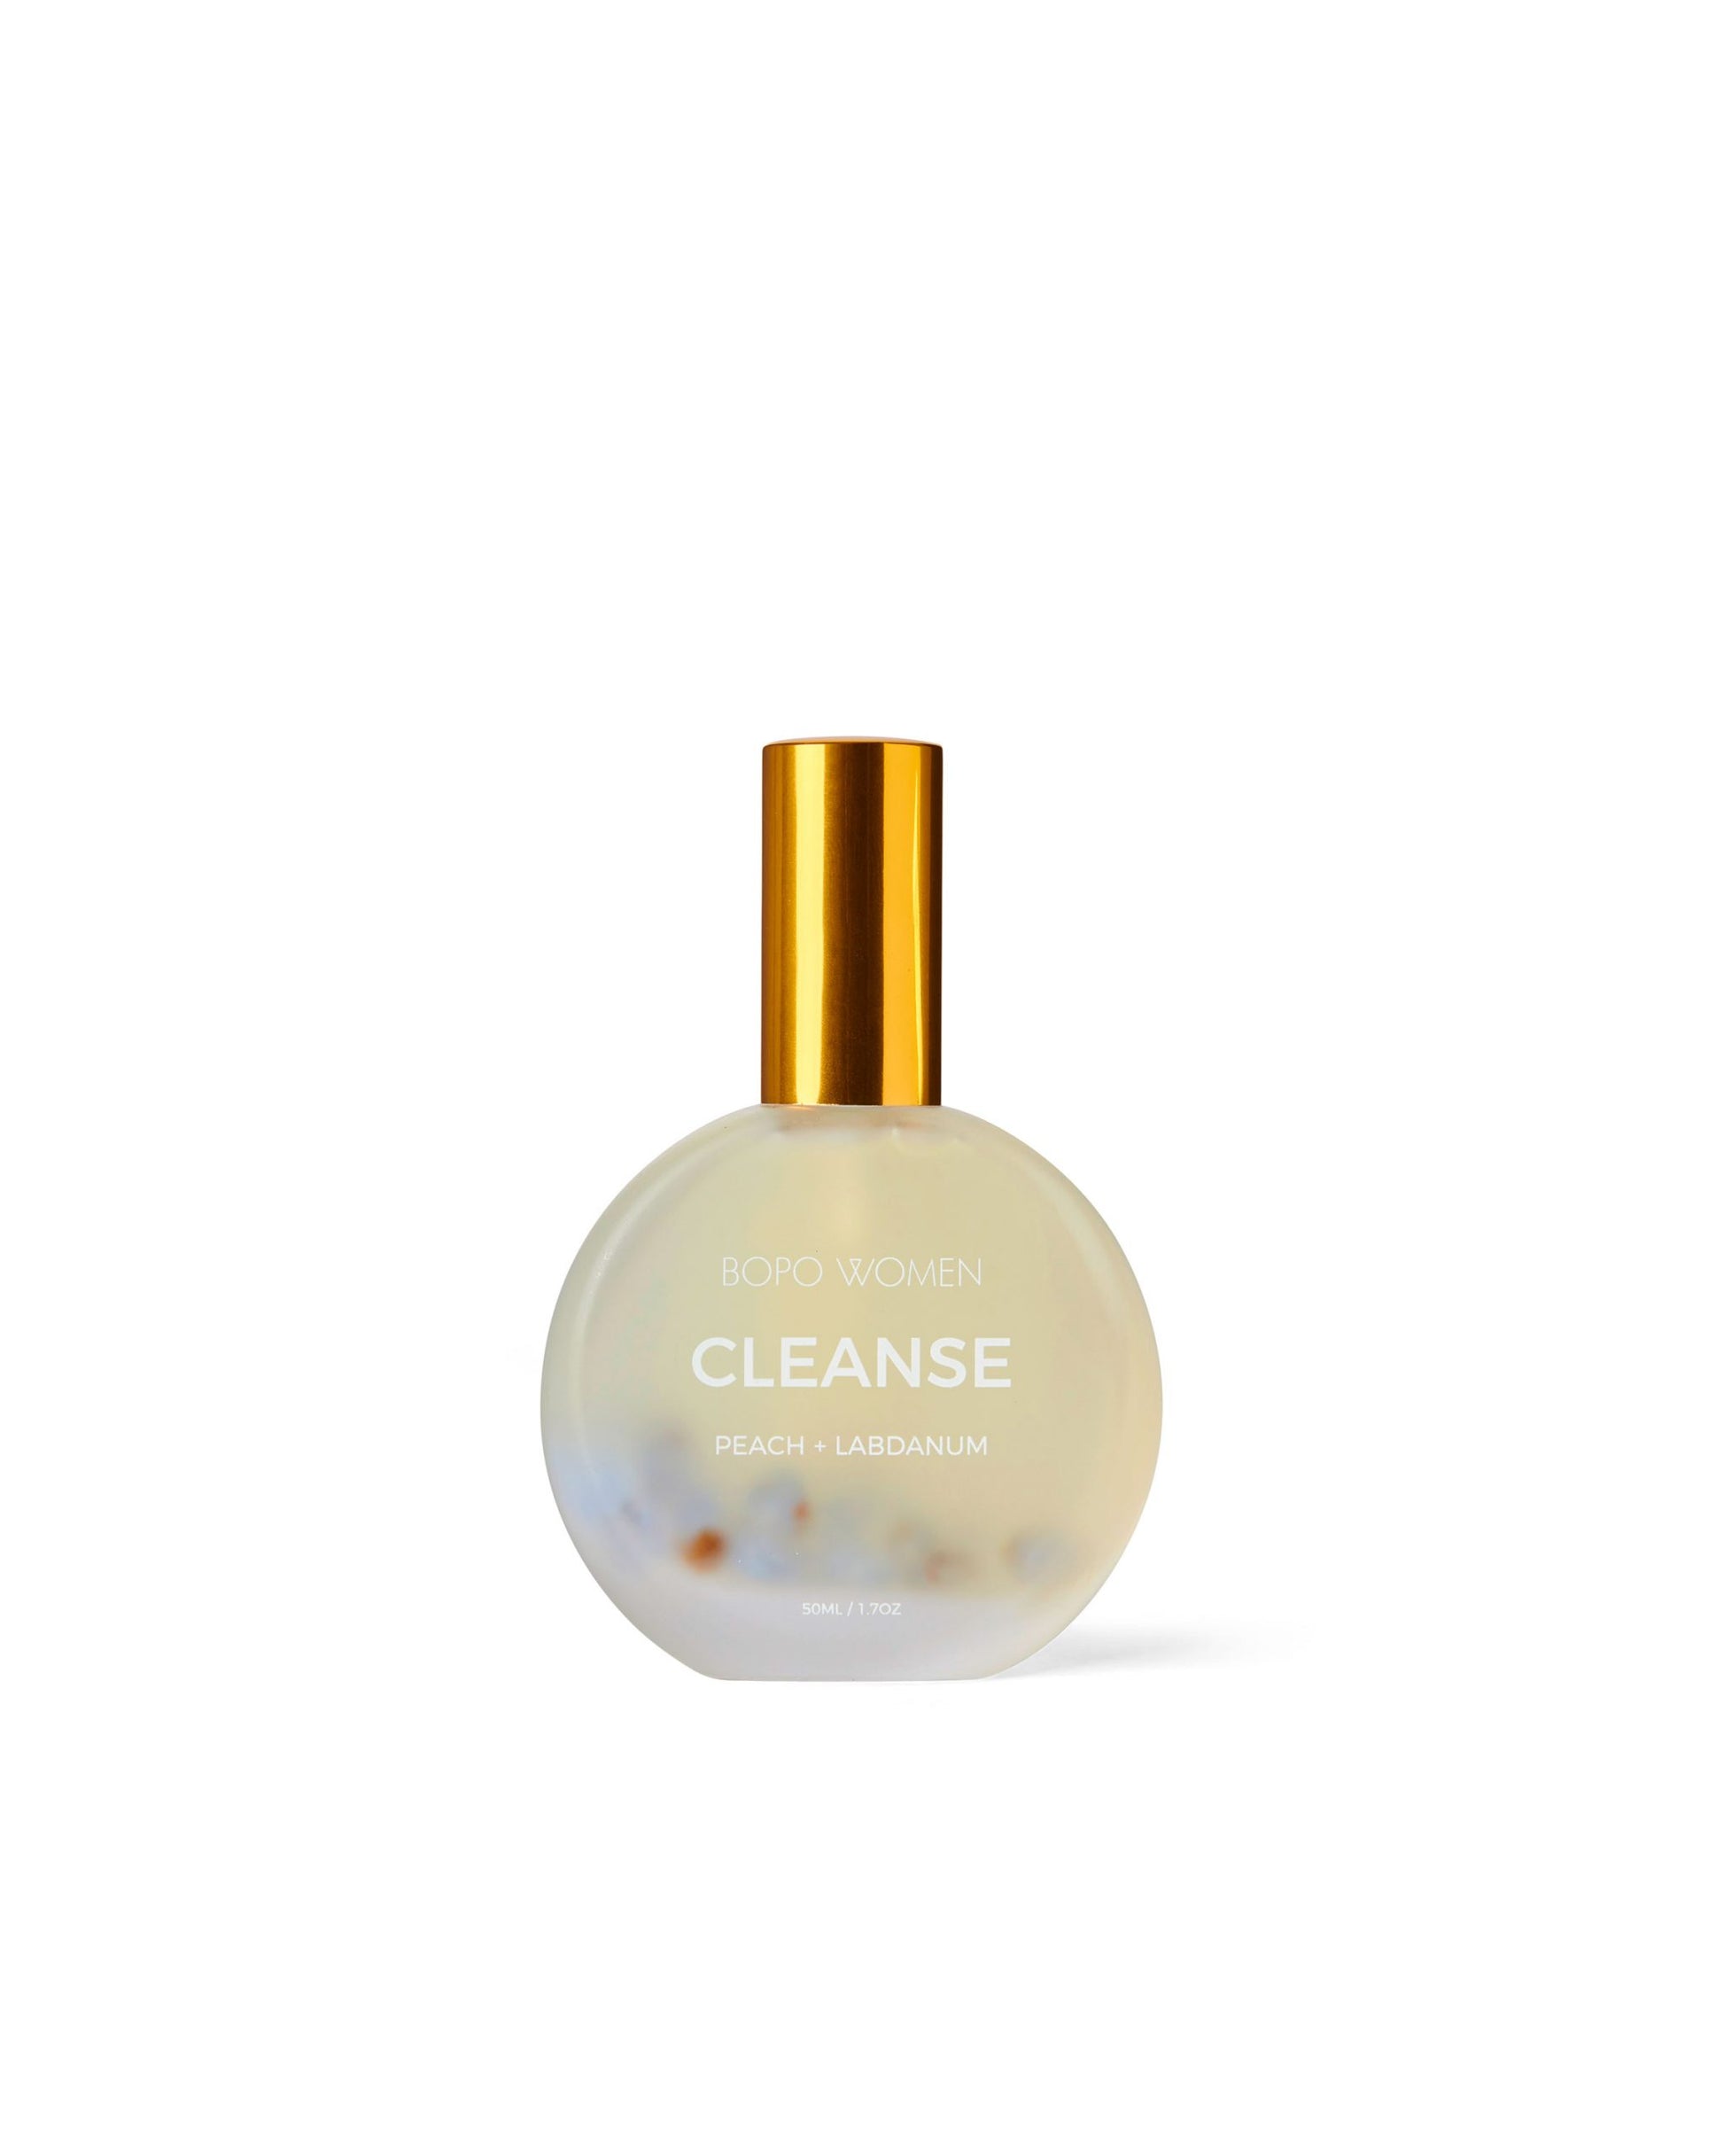 Bopo Women - Cleanse Body Mist | The Ivy Plant Studio  | Body Mists| Bopo women | perfume 